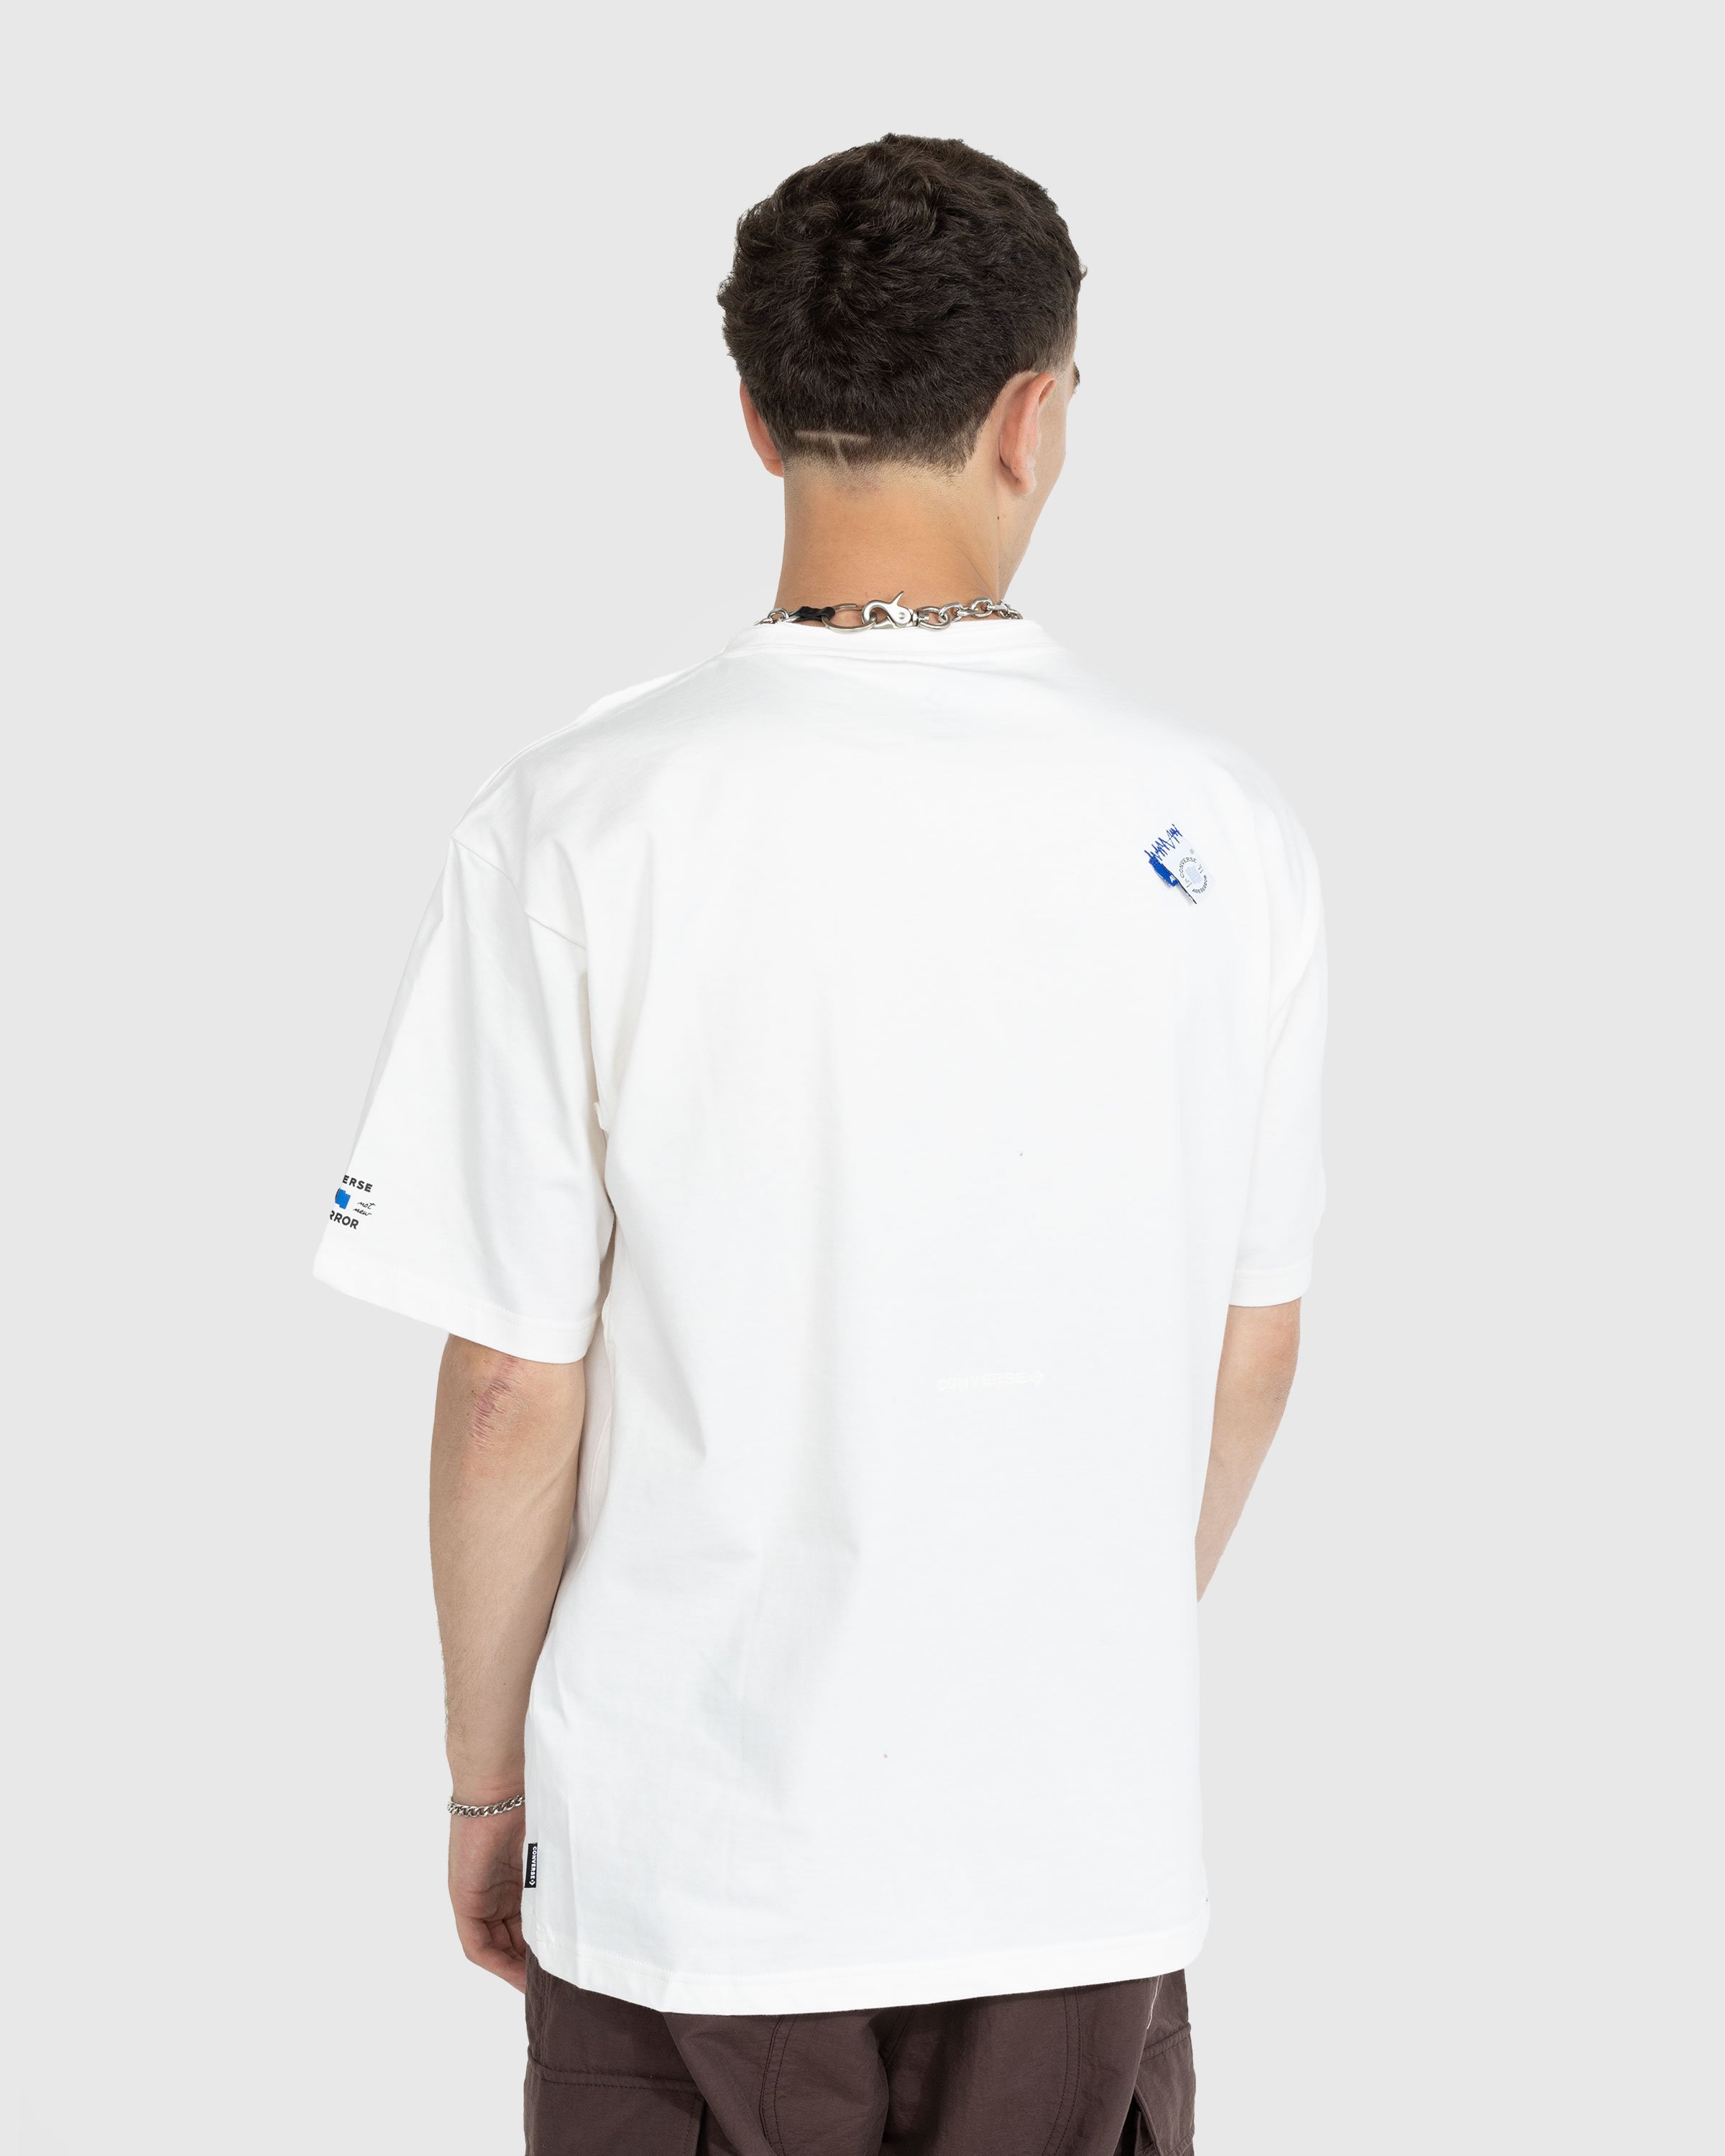 Converse x Ader Error - Shapes T-Shirt Cloud Dancer - Clothing - White - Image 3